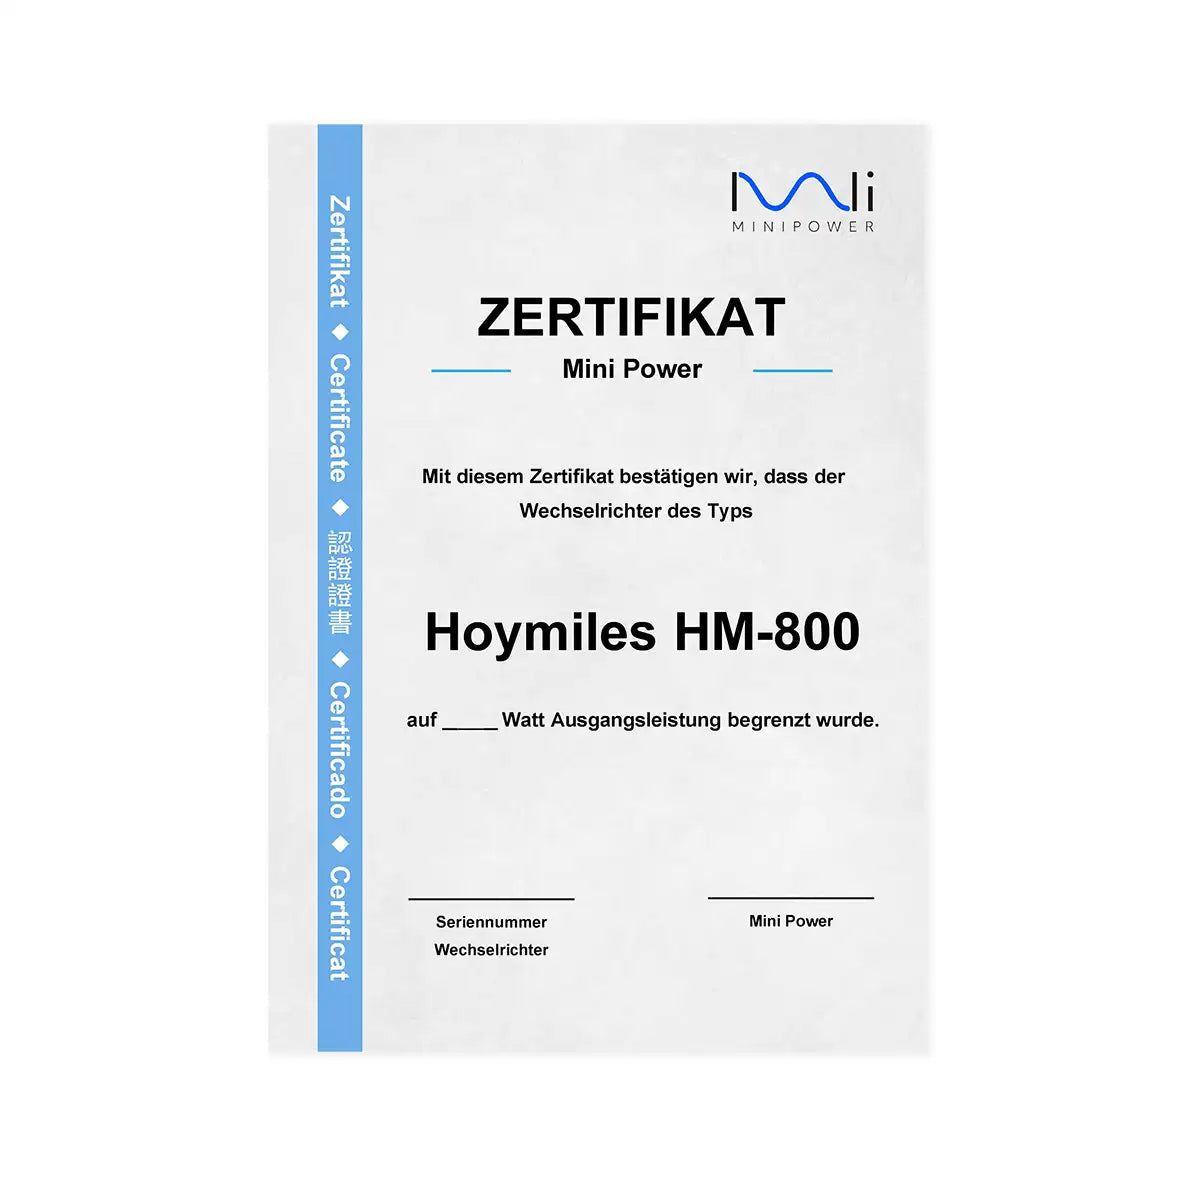 Hoymiles DTU-Wlite with certificate - certificate